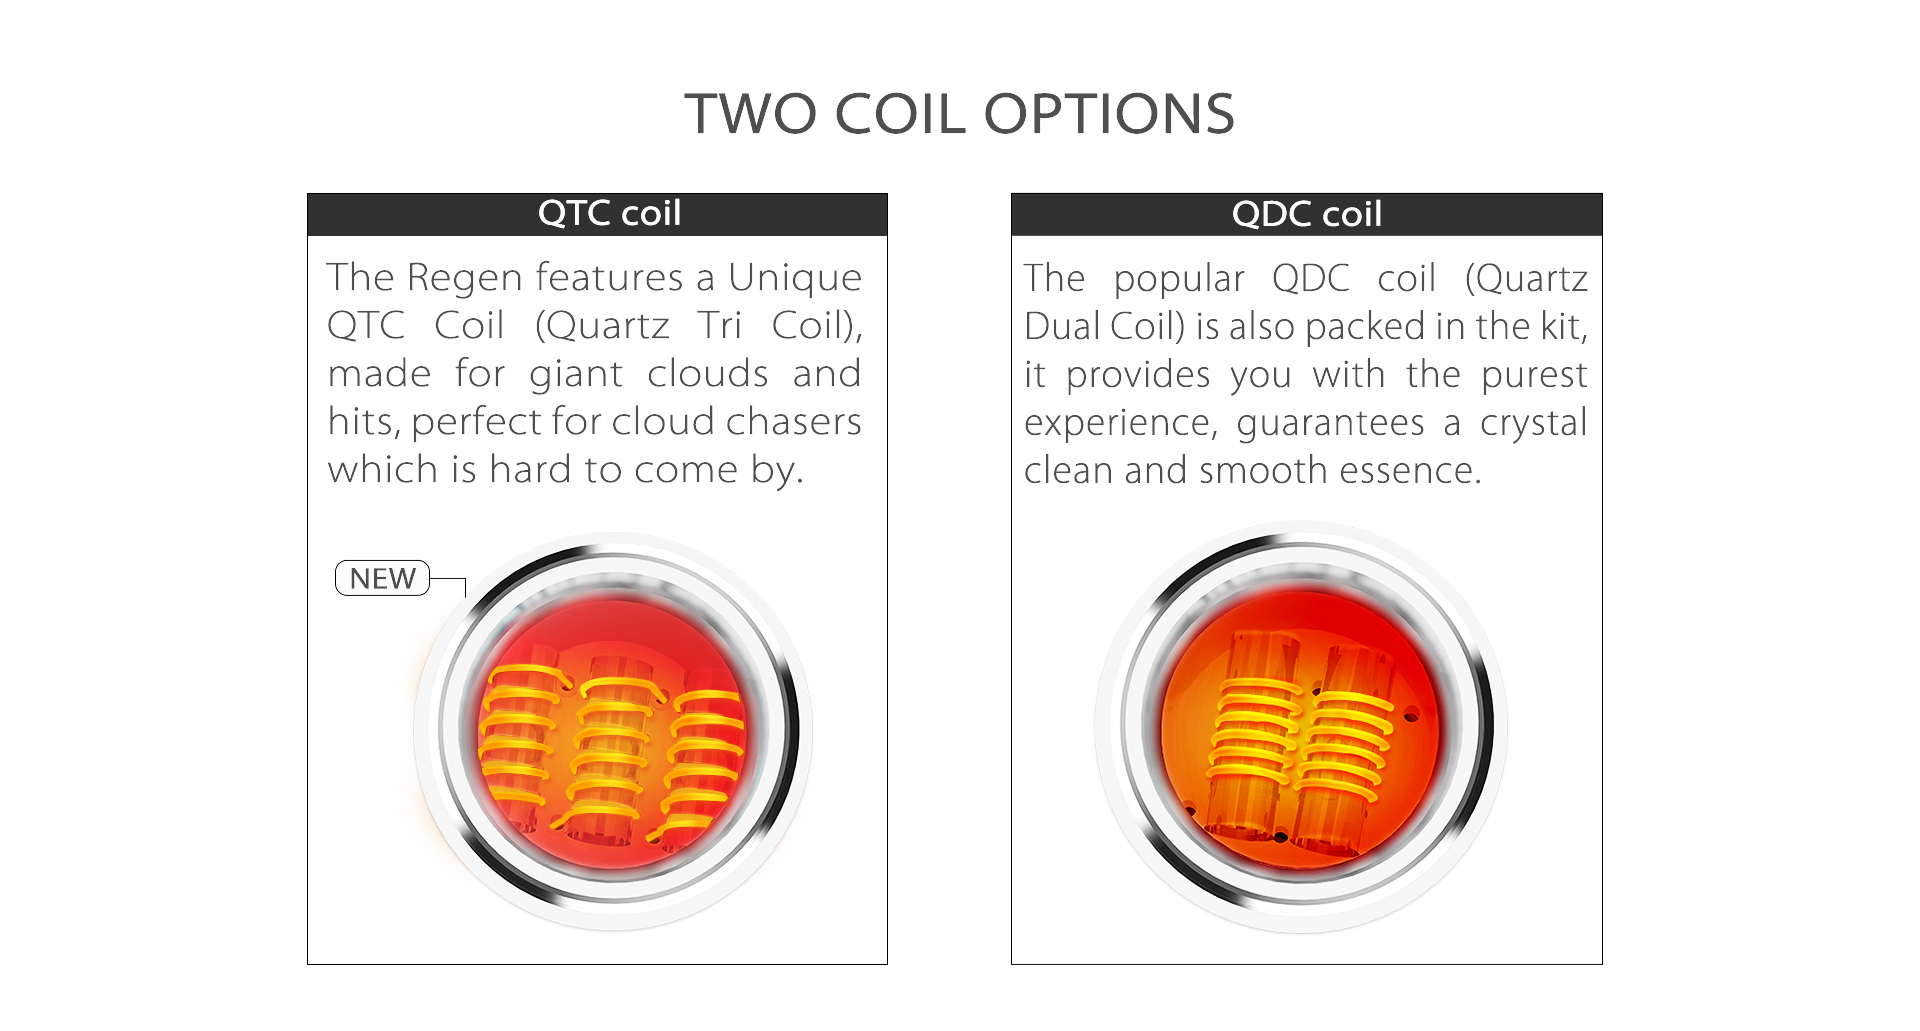 The Yocan Regen vaporizer pen provide two coil options: QTC (Quart Tri Coil) and QDC (Quartz Dual Coil).